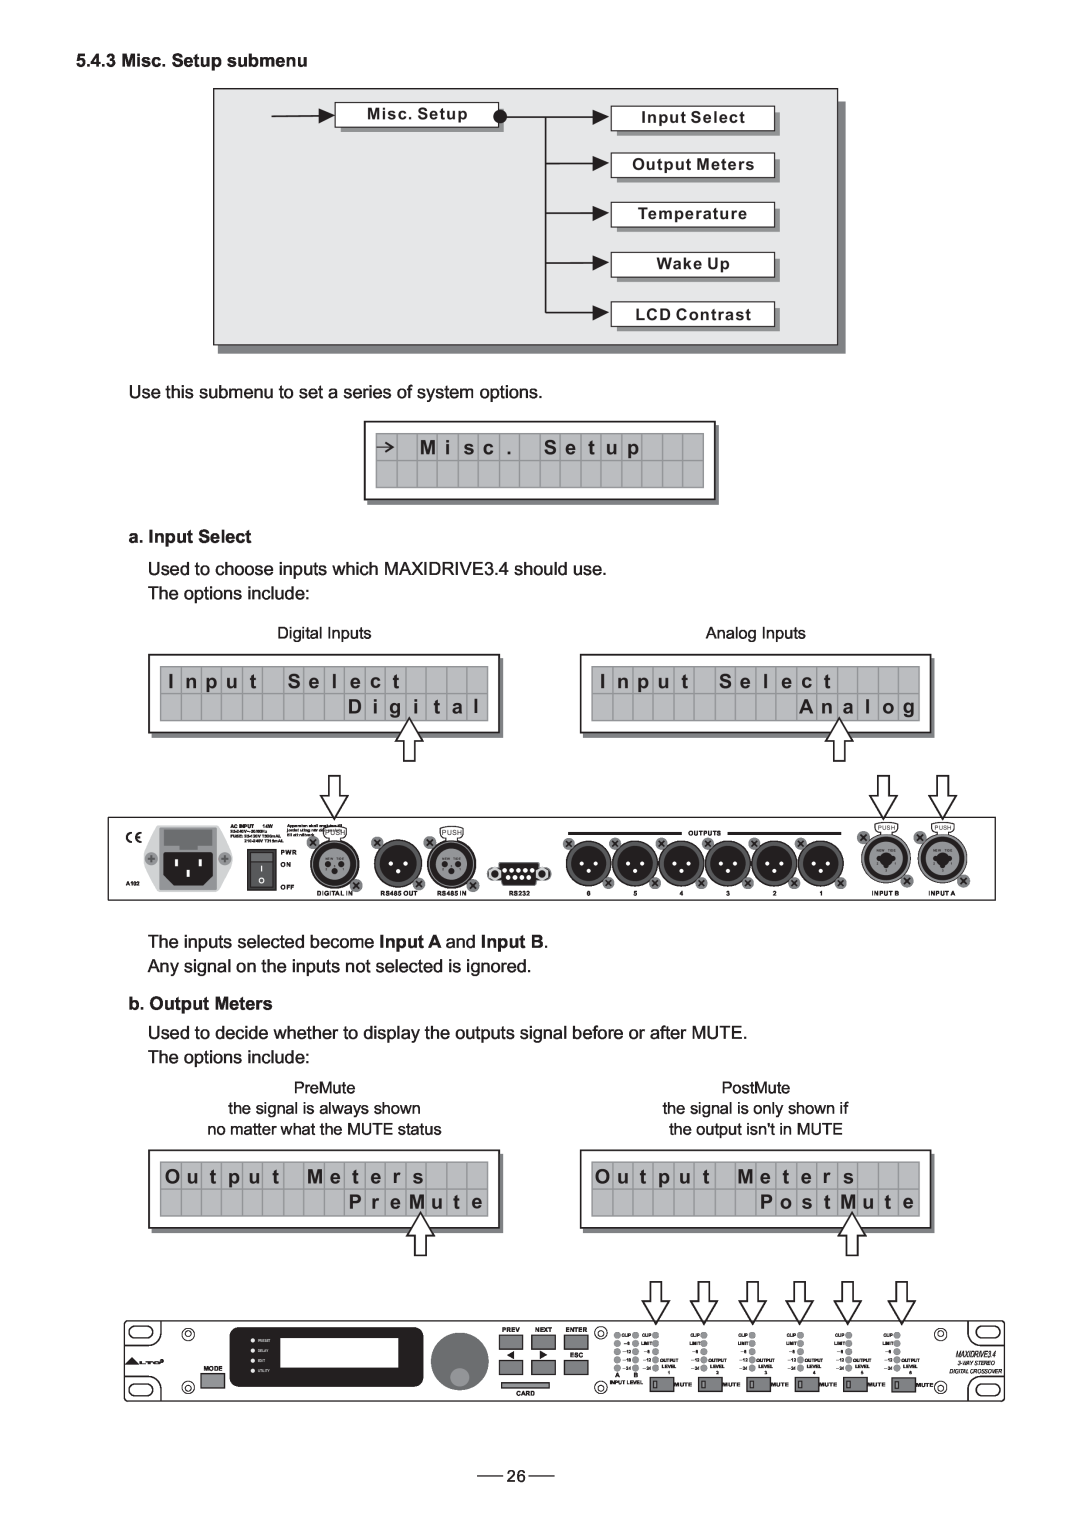 Nilfisk-ALTO 3.4 Misc. Setup submenu, a. Input Select, b. Output Meters, Digital Inputs, PreMute, PostMute, Push, Outputs 